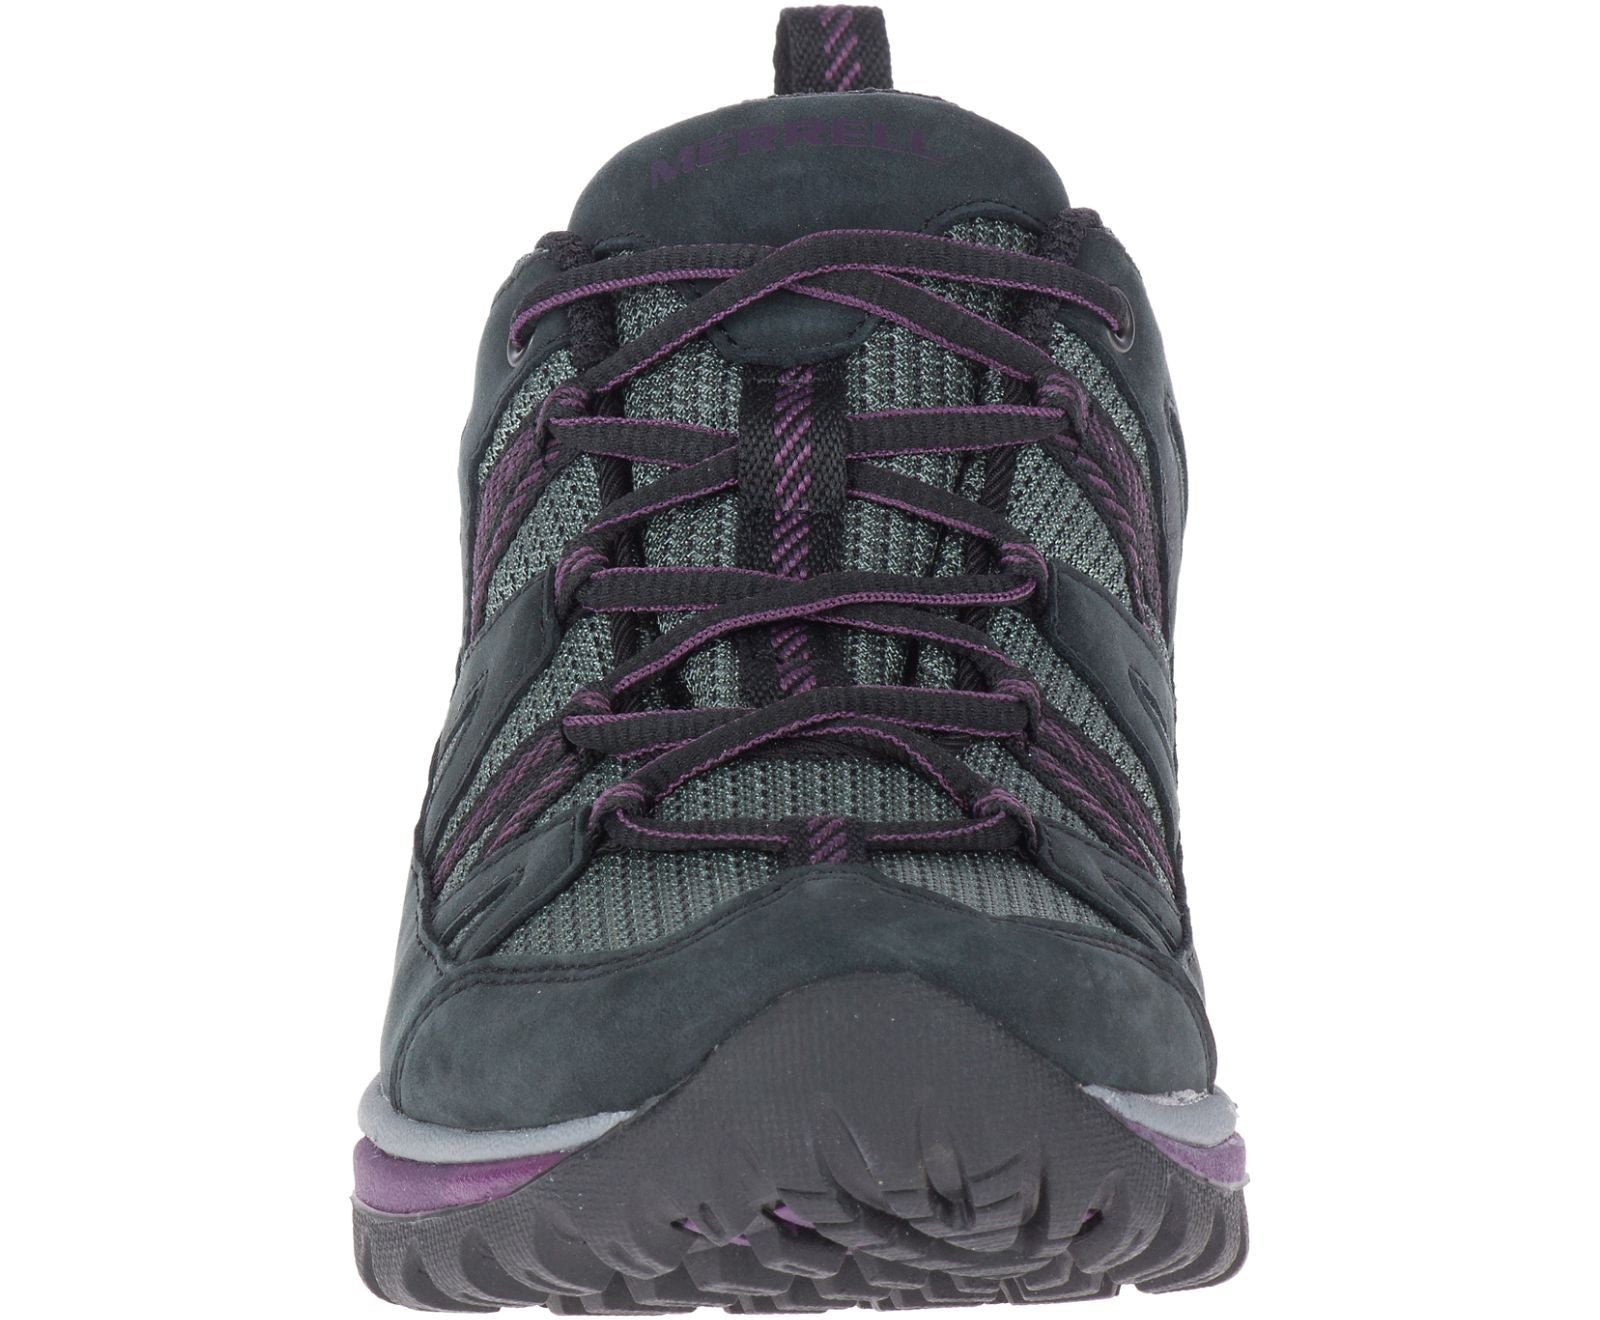 Merrell Siren Sport 3 Ladies Black & BlackBerry Gore-tex Lace Up Hiking Shoes.